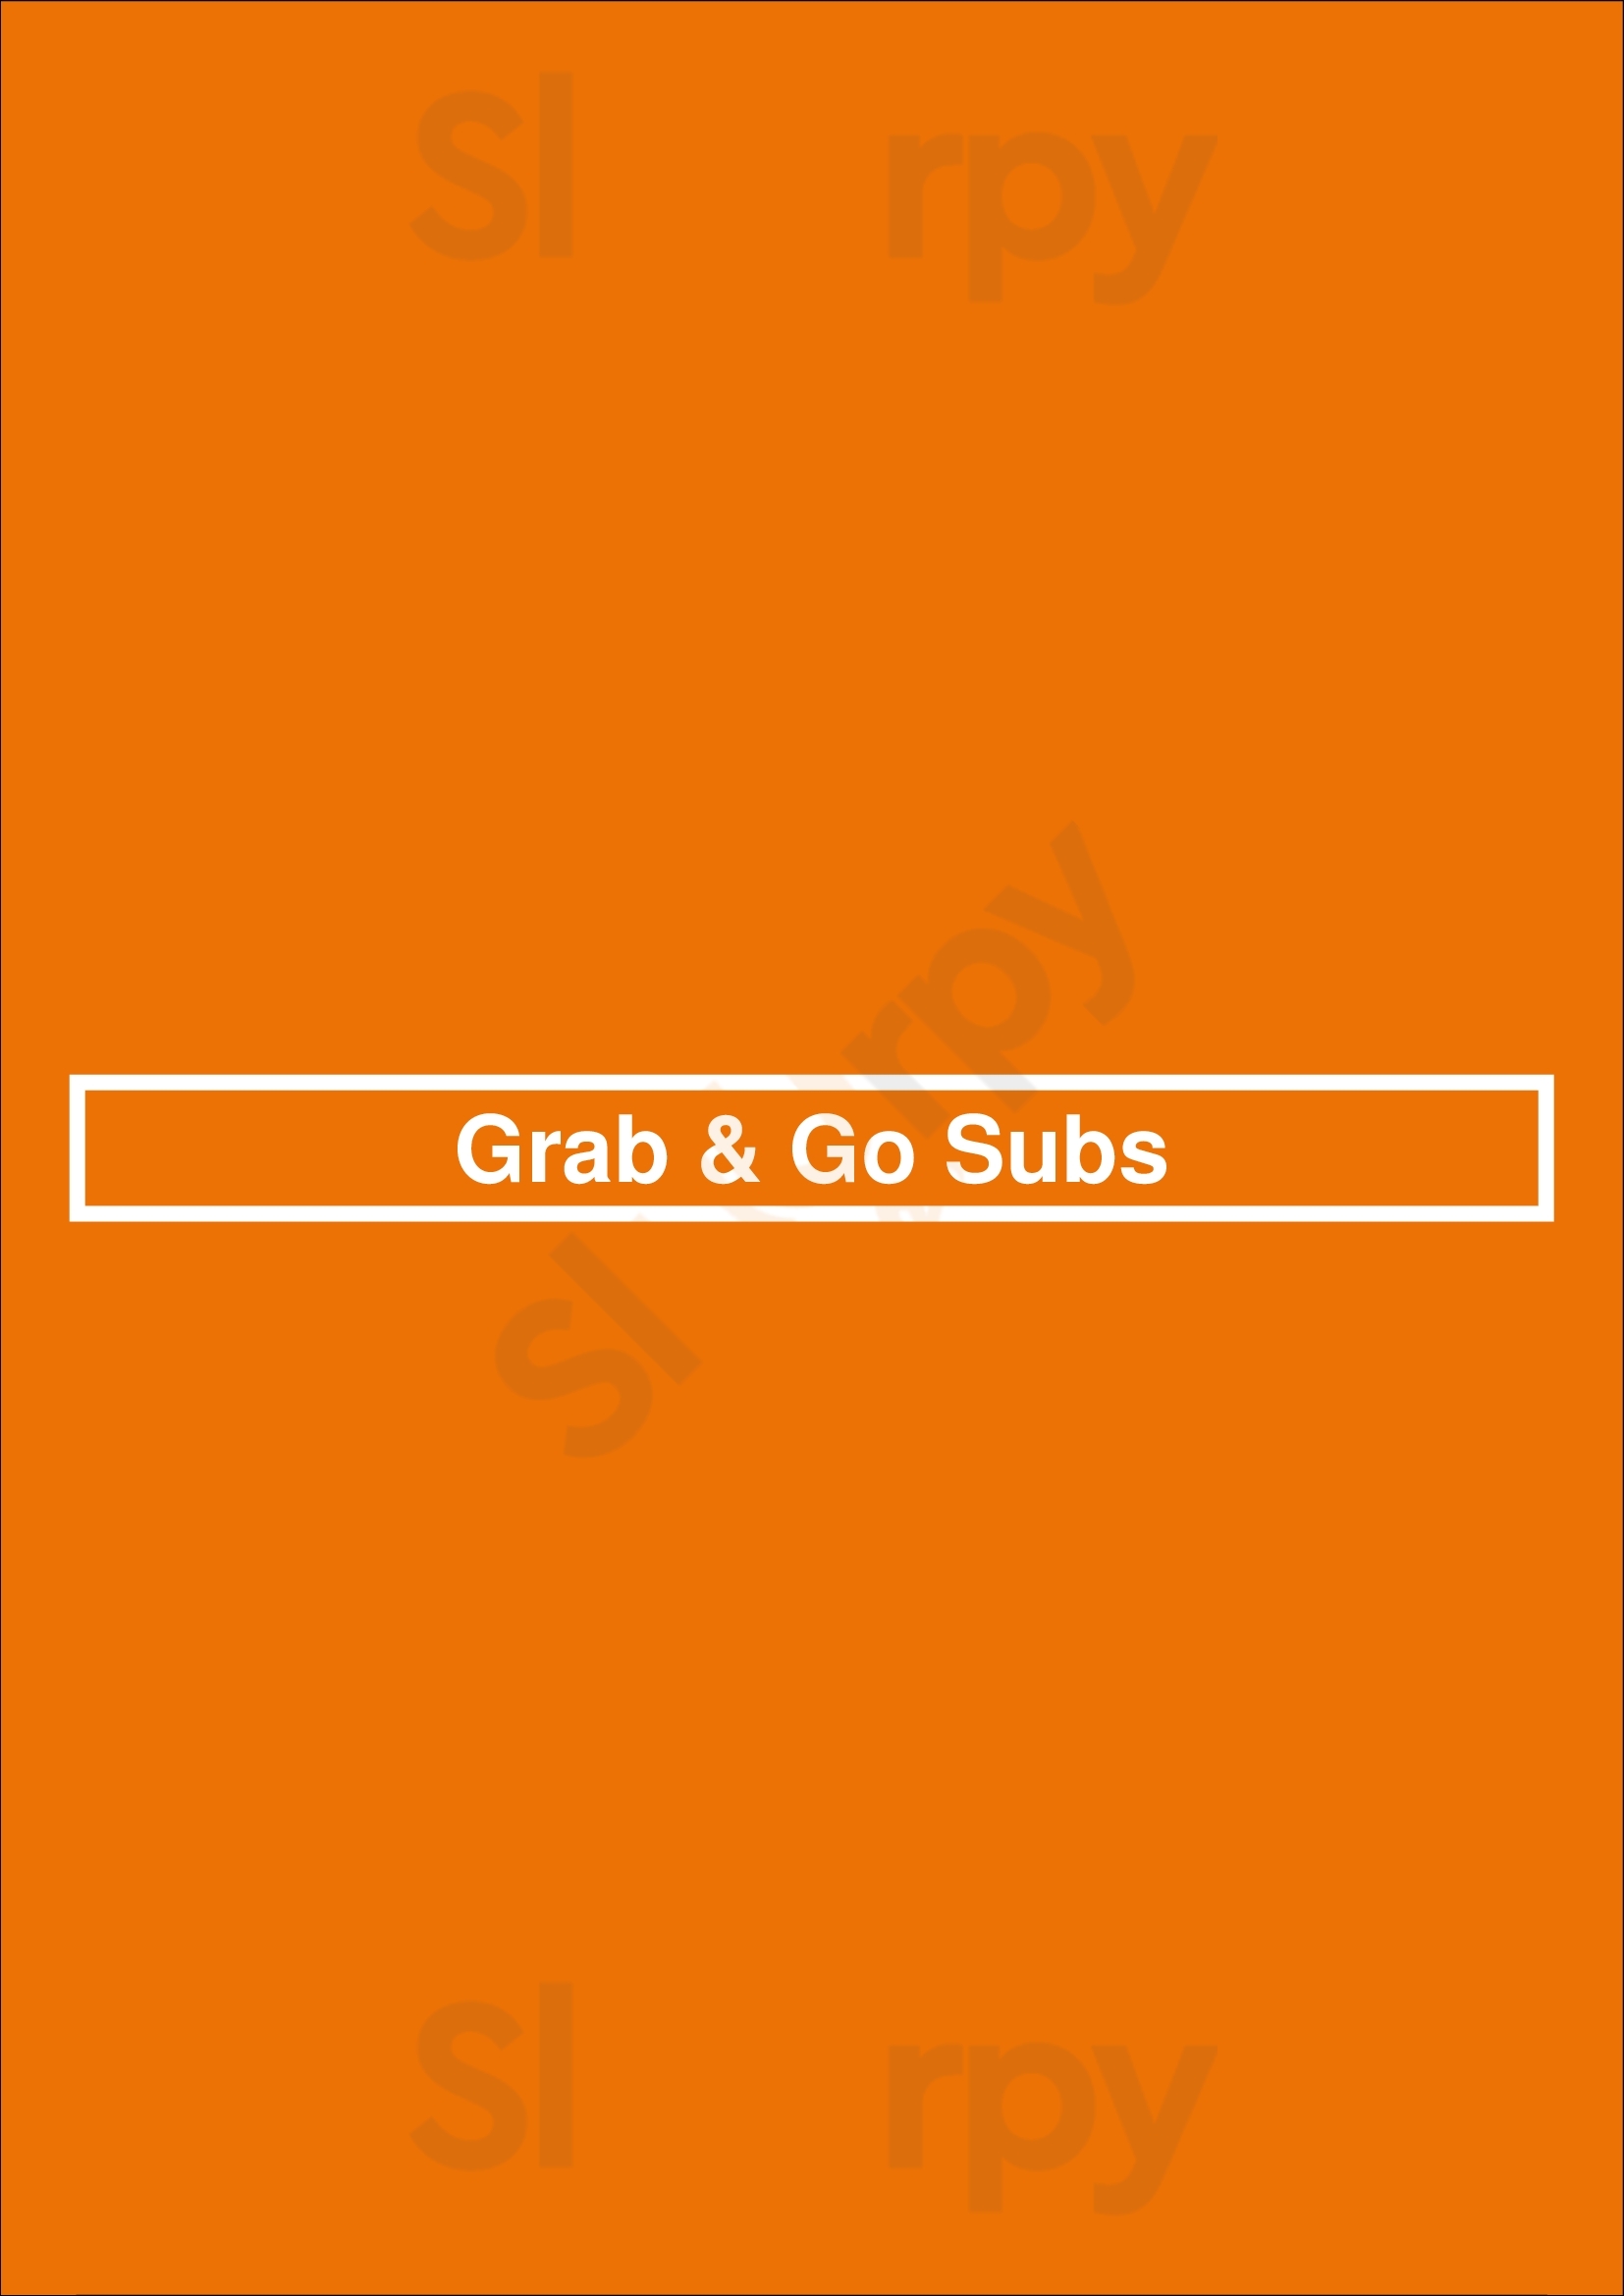 Grab & Go Subs San Diego Menu - 1